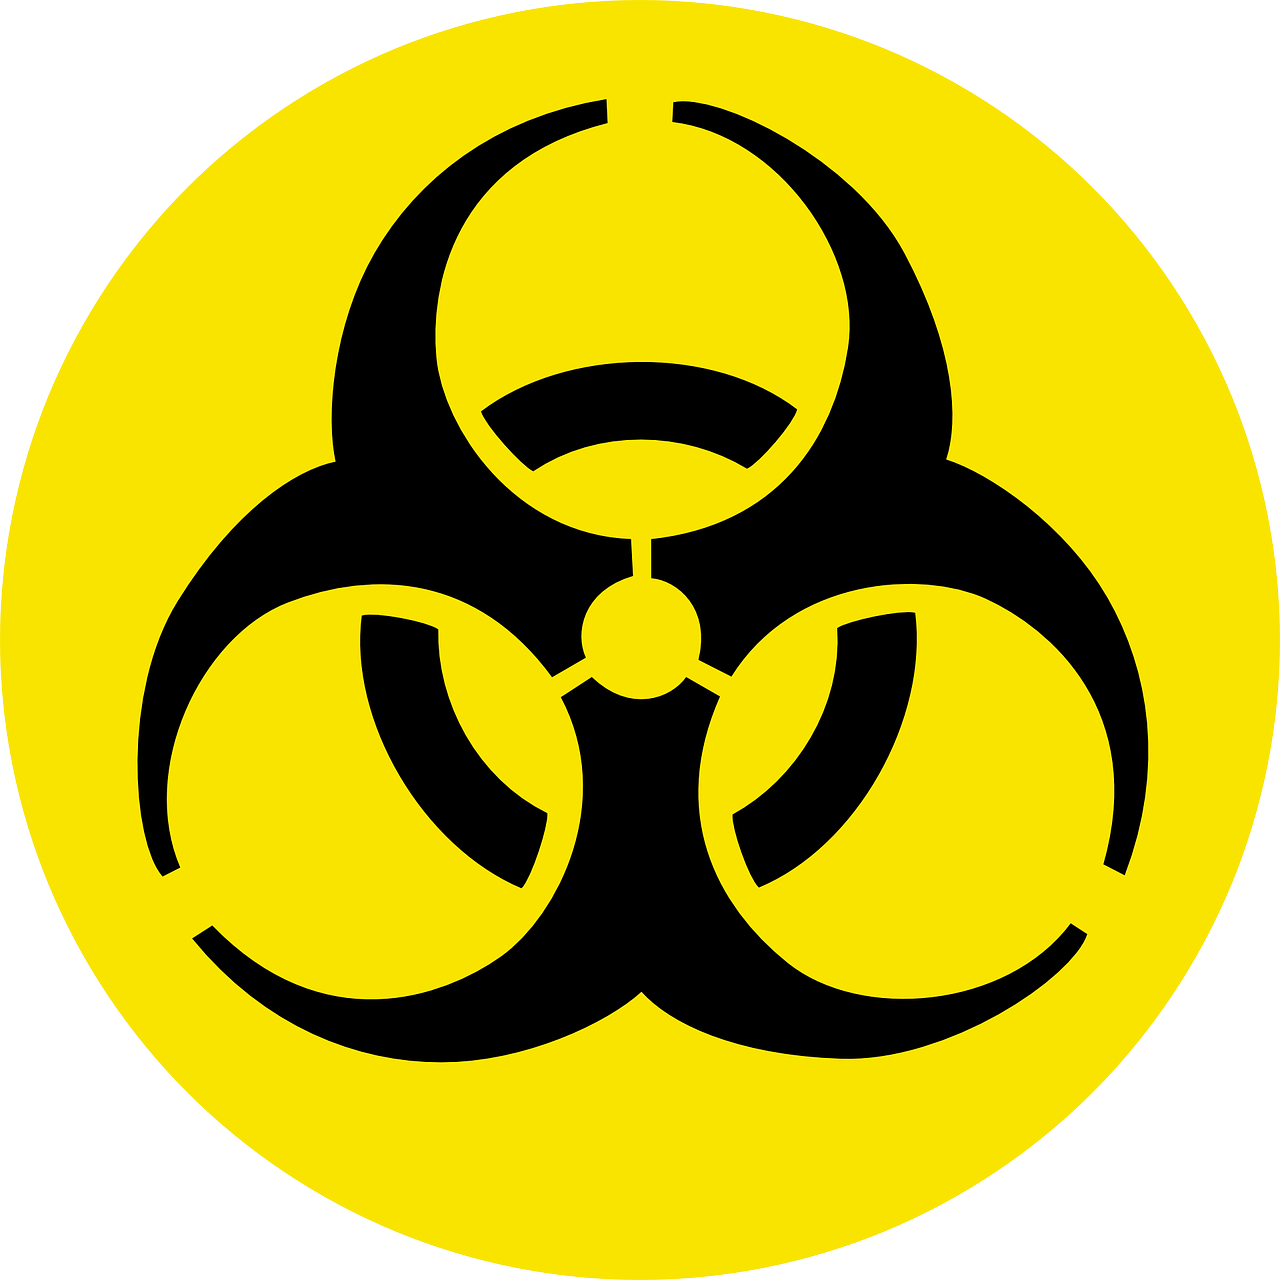 biohazard-g984b6762f_1280